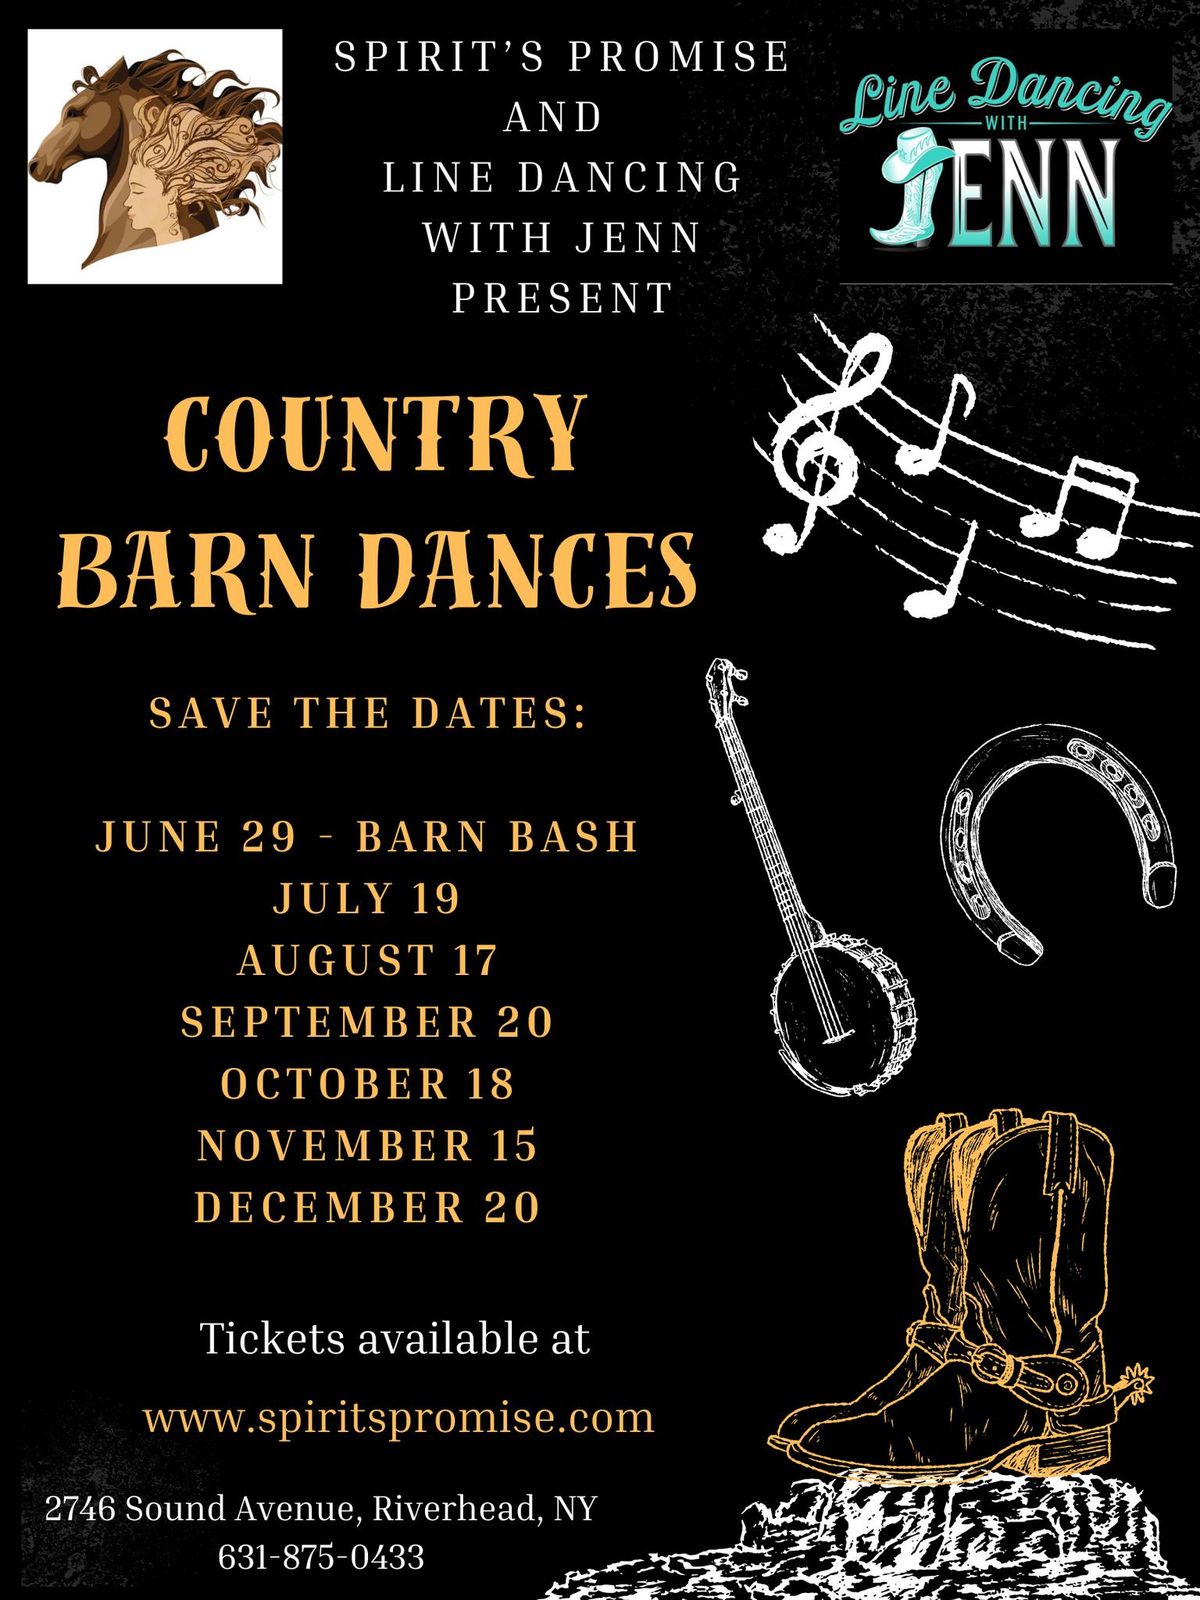 Country Barn Dances with Jenn